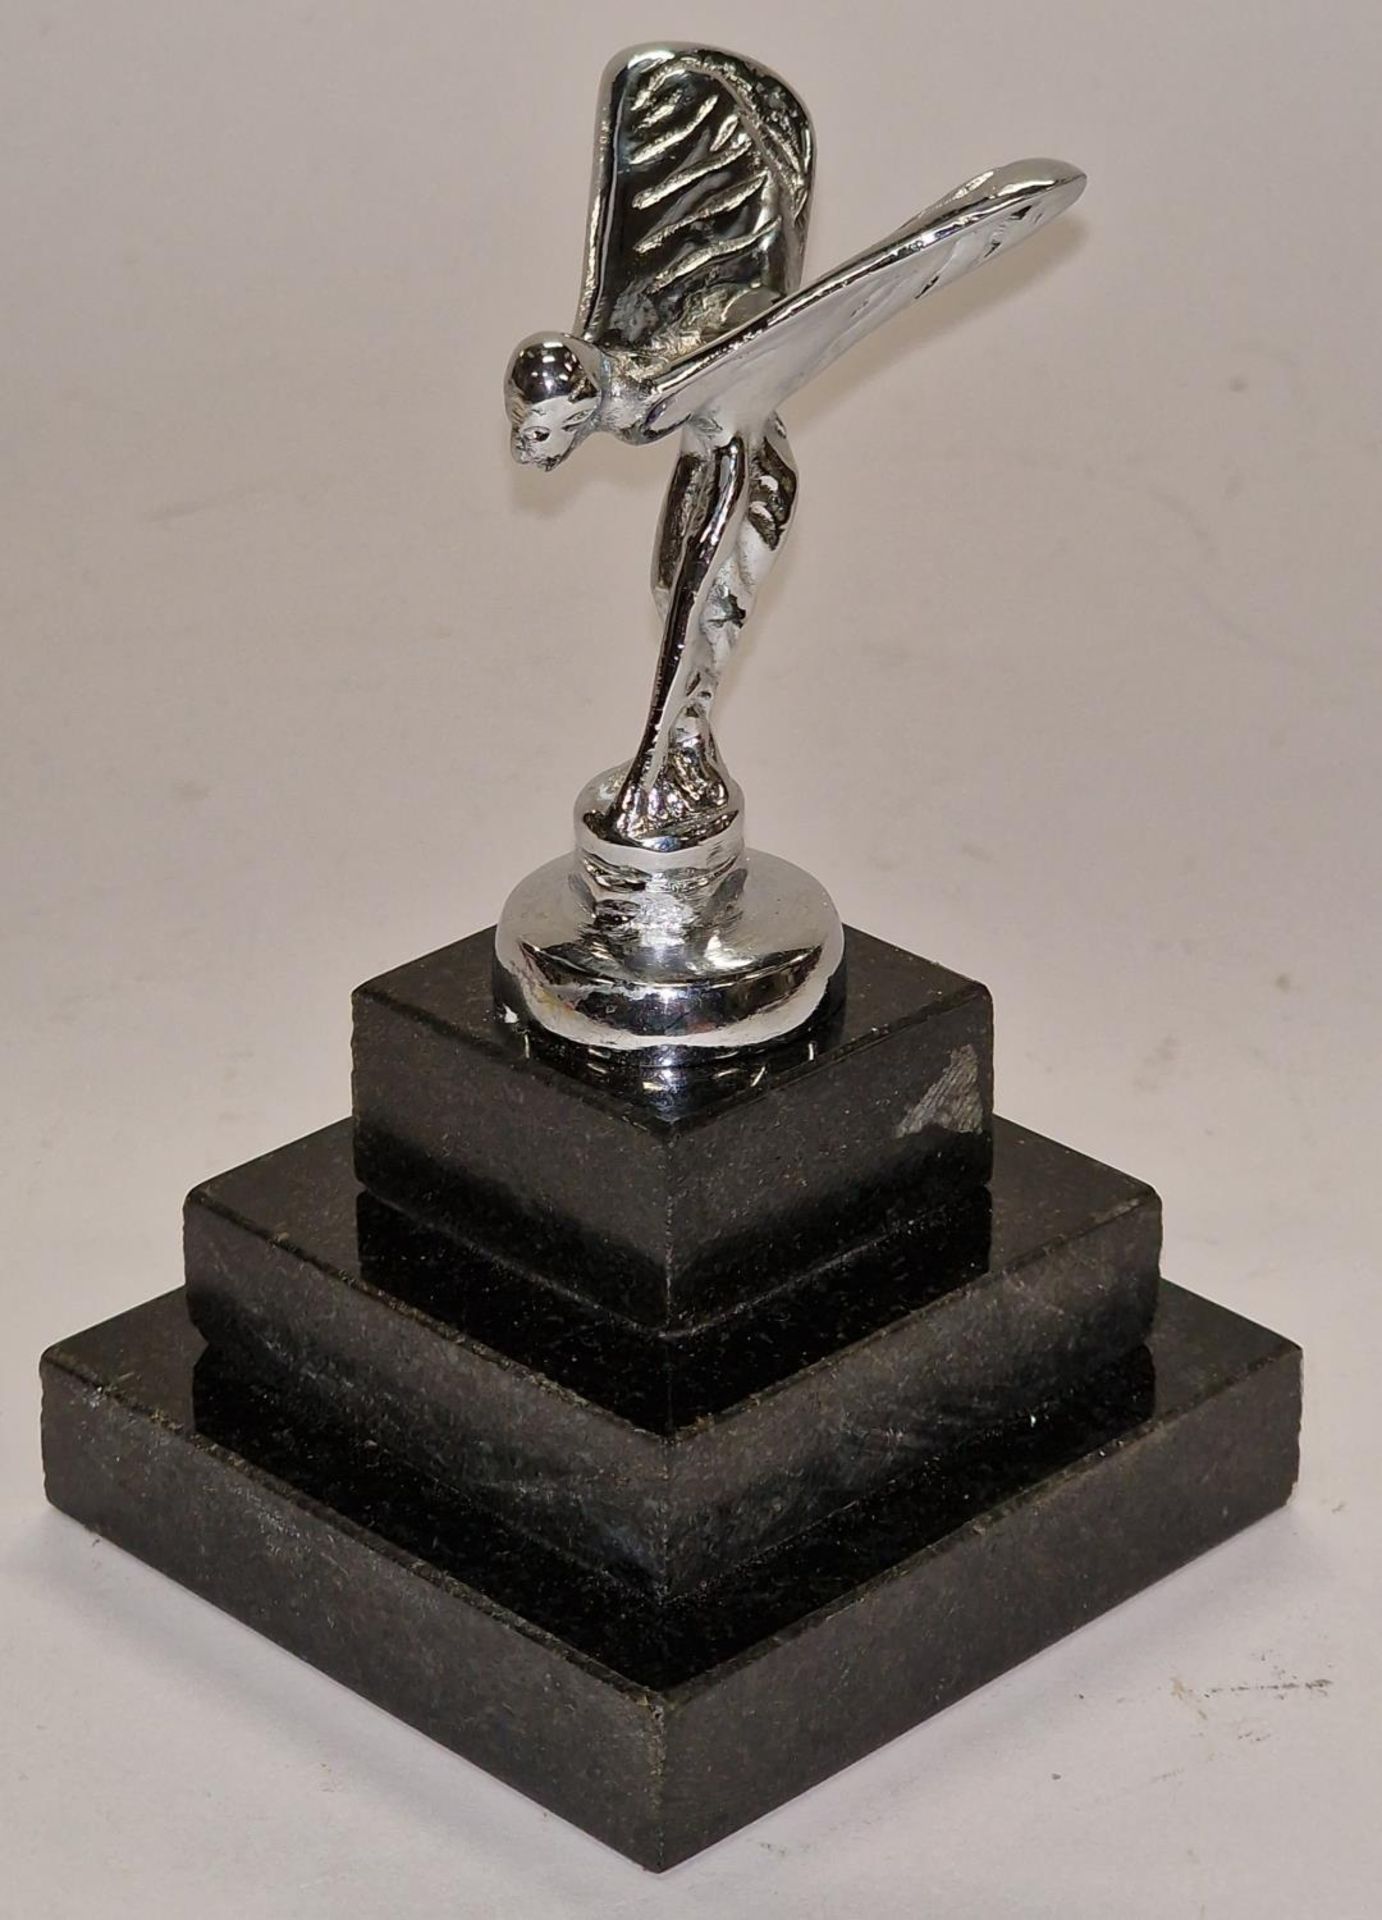 Miniature Rolls Royce Spirit of Ecstasy figure on stepped plinth. - Image 2 of 3